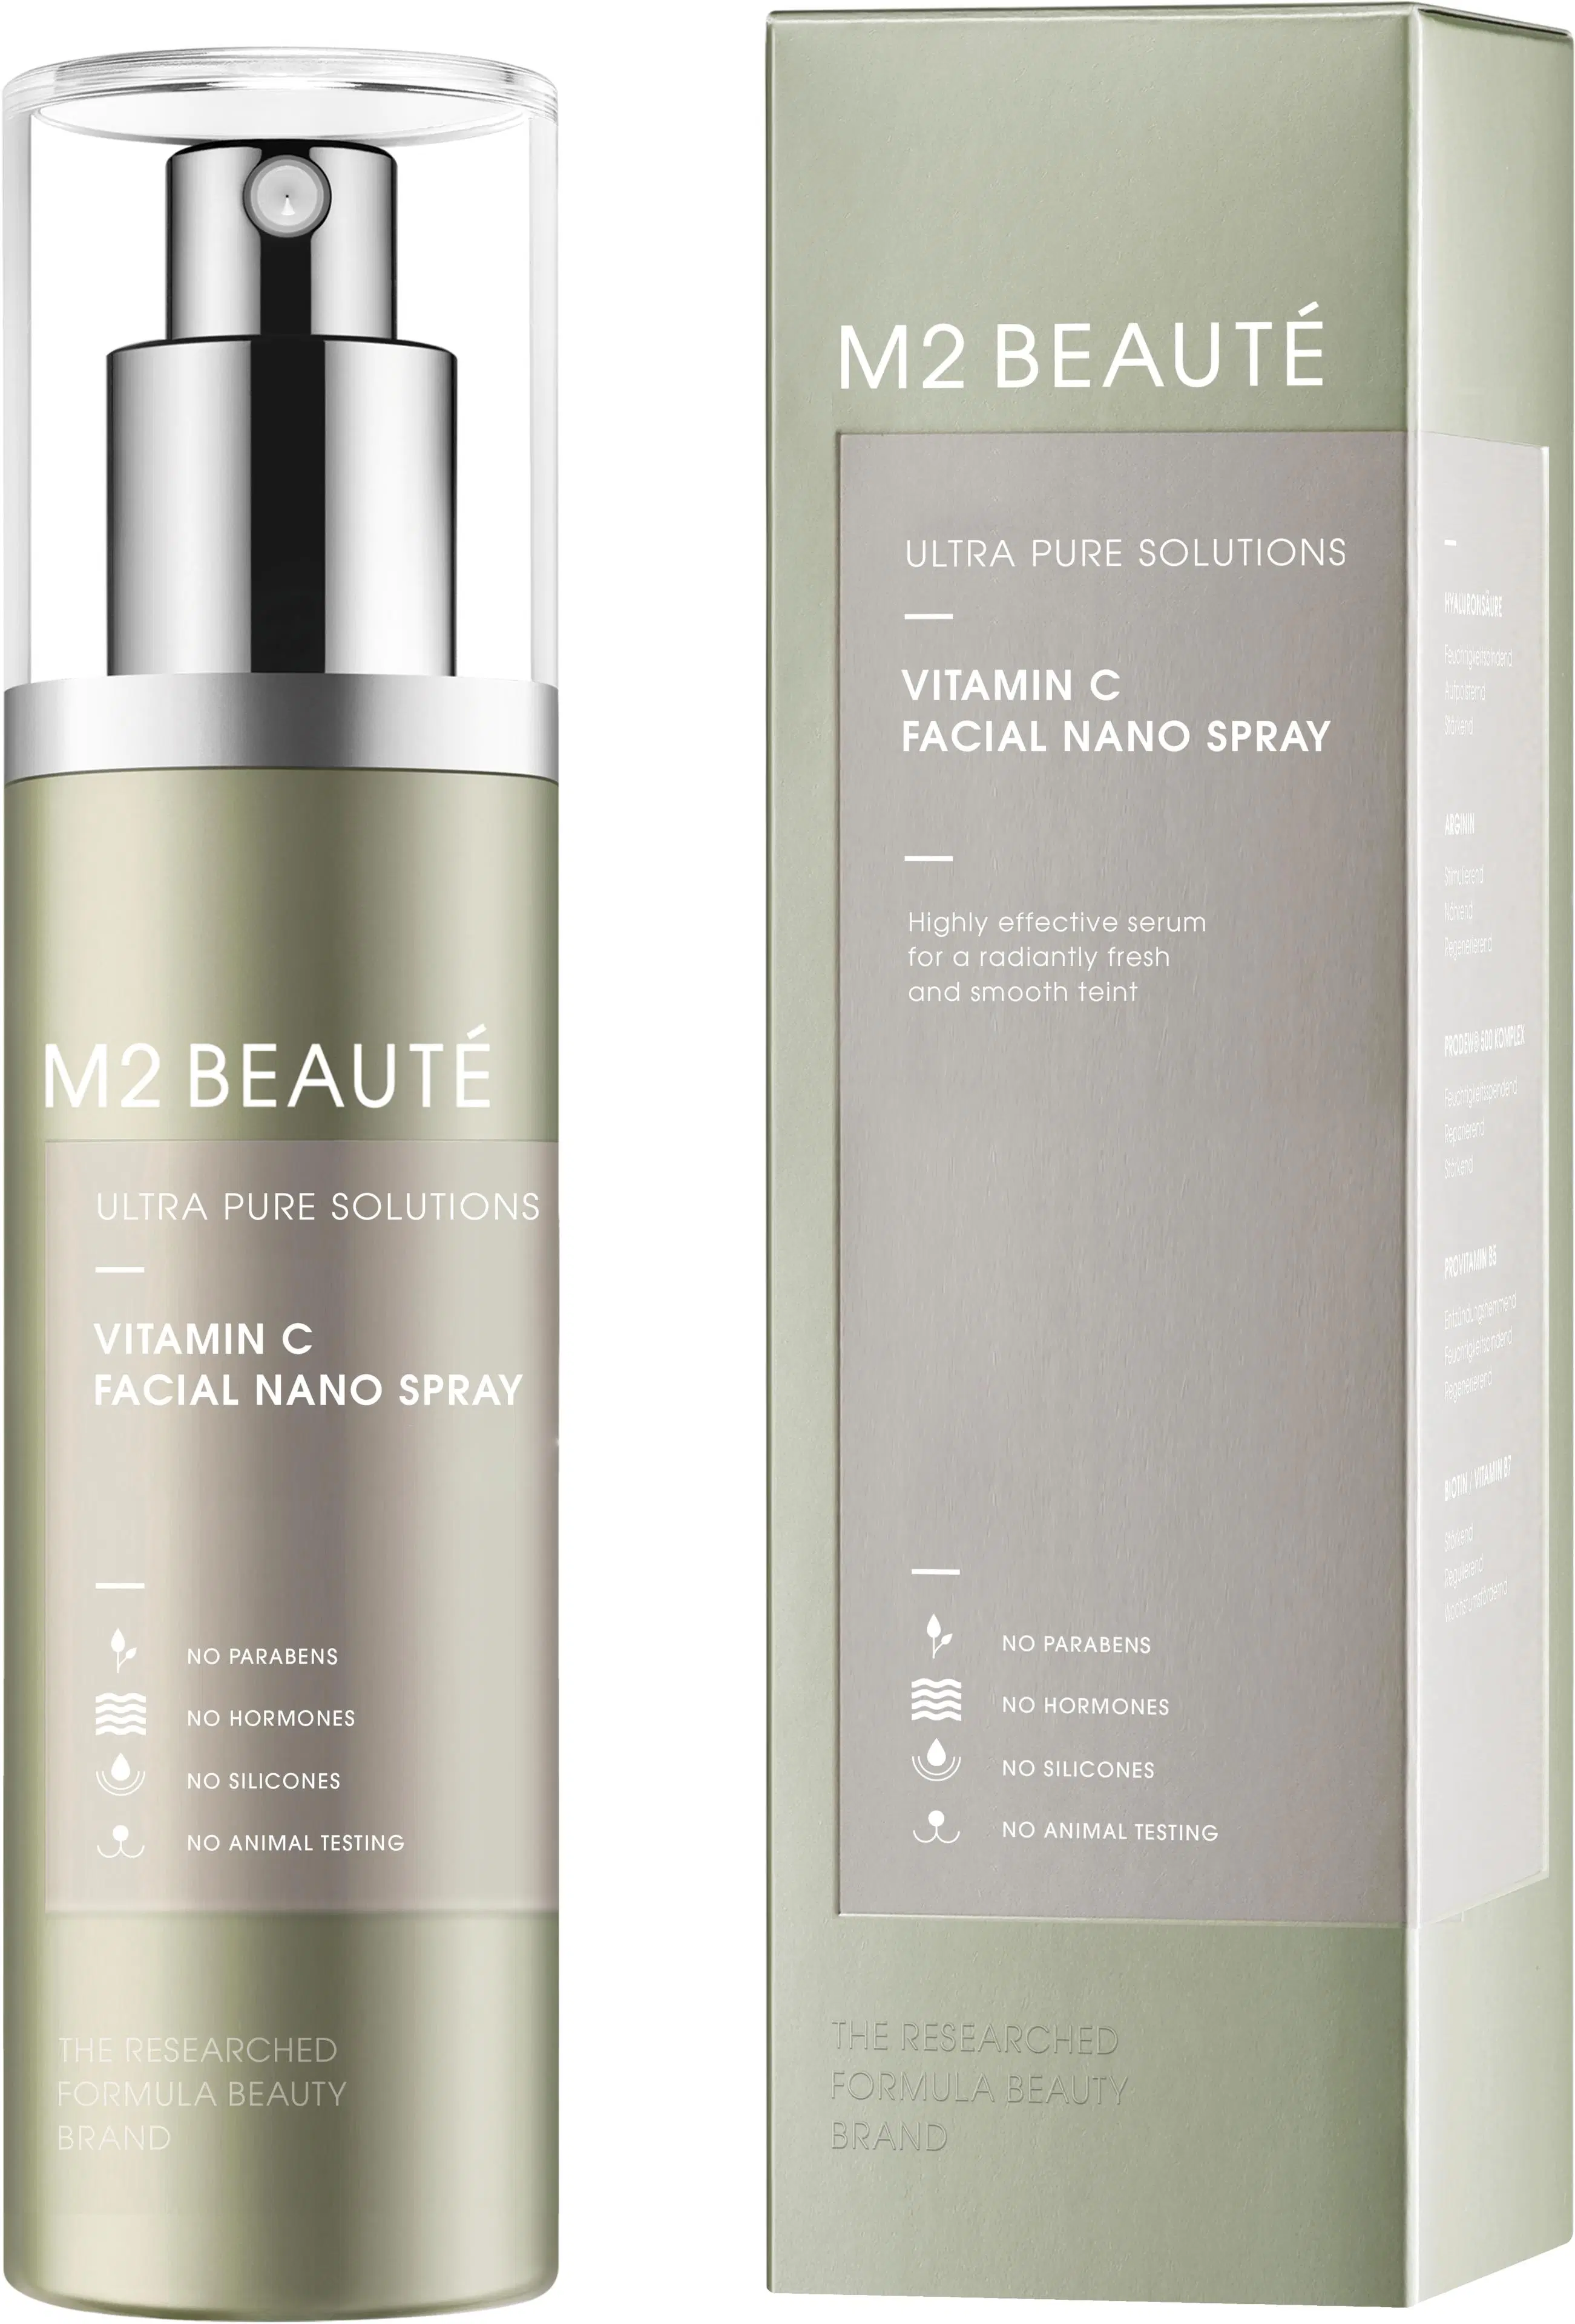 M2 Beauté Ultra Pure Solutions Facial Nano Spray Vitamin C seerumisuihke 75 ml